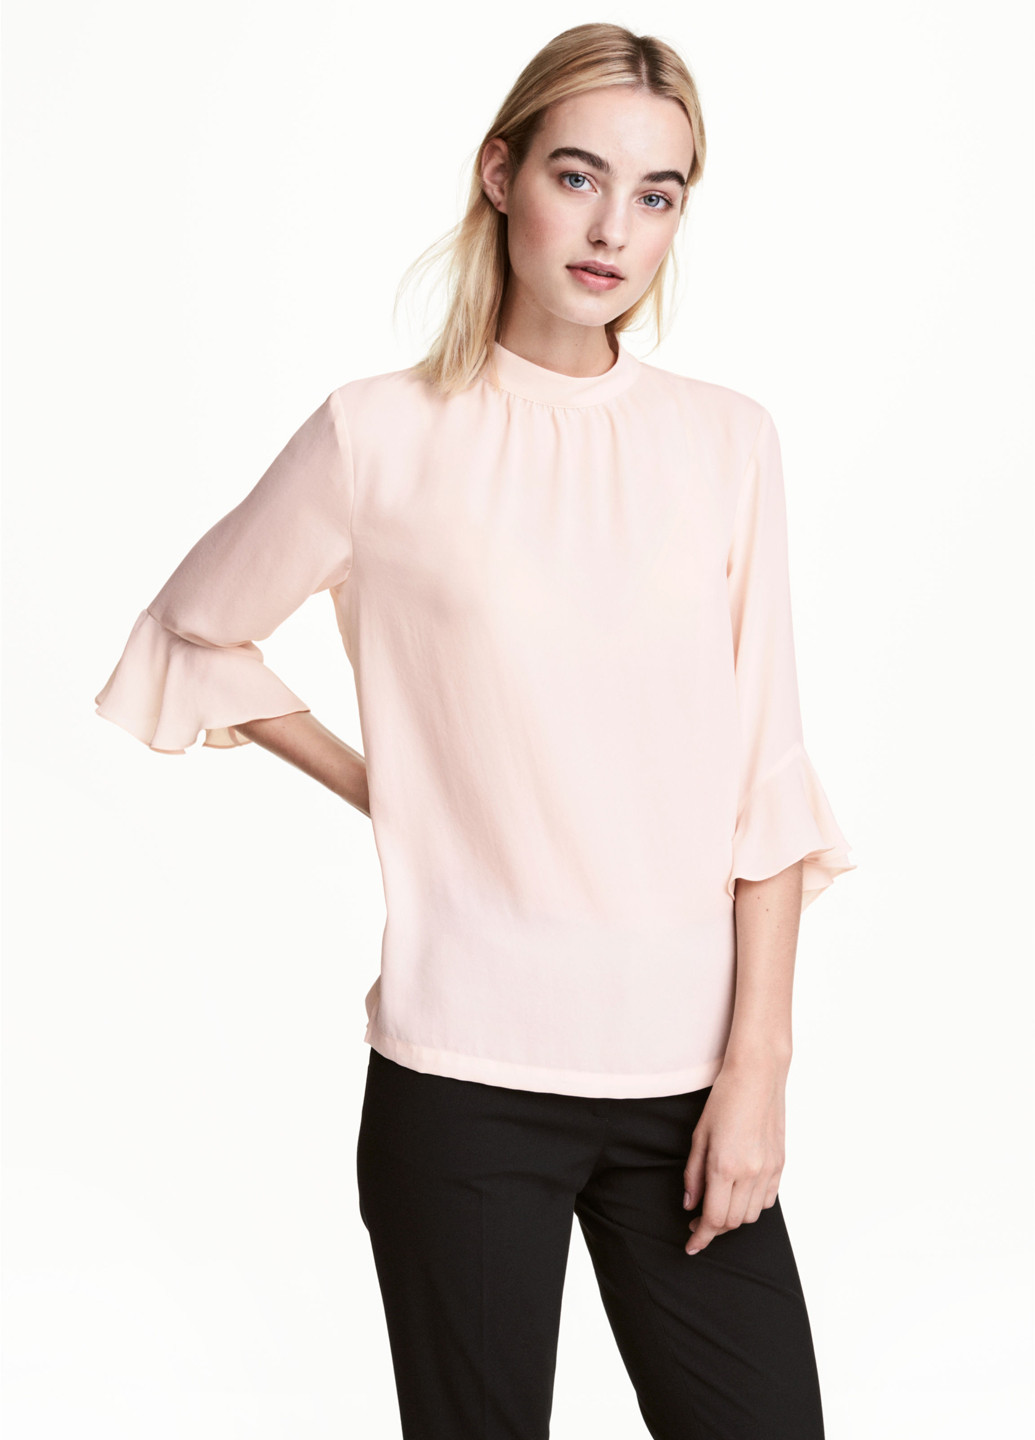 Бледно-розовая демисезонная блуза H&M